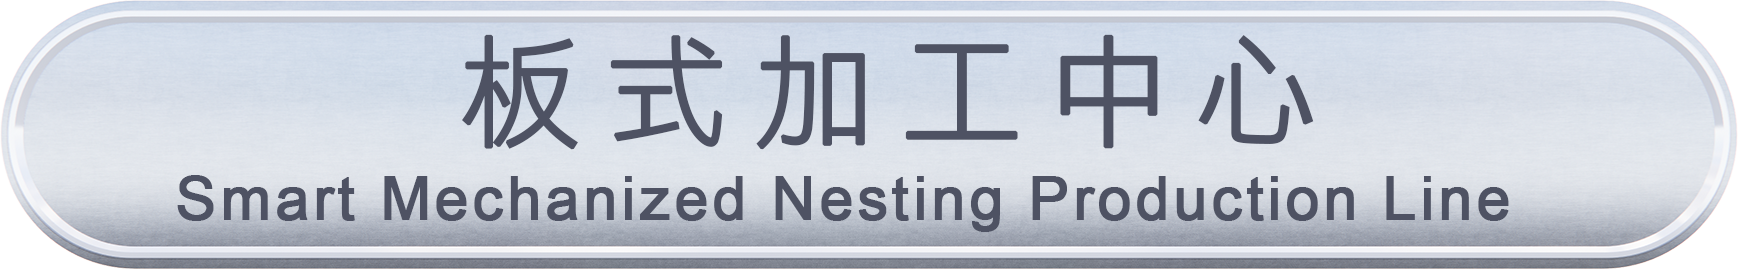 Smart Mechanized Nesting Processing Line 